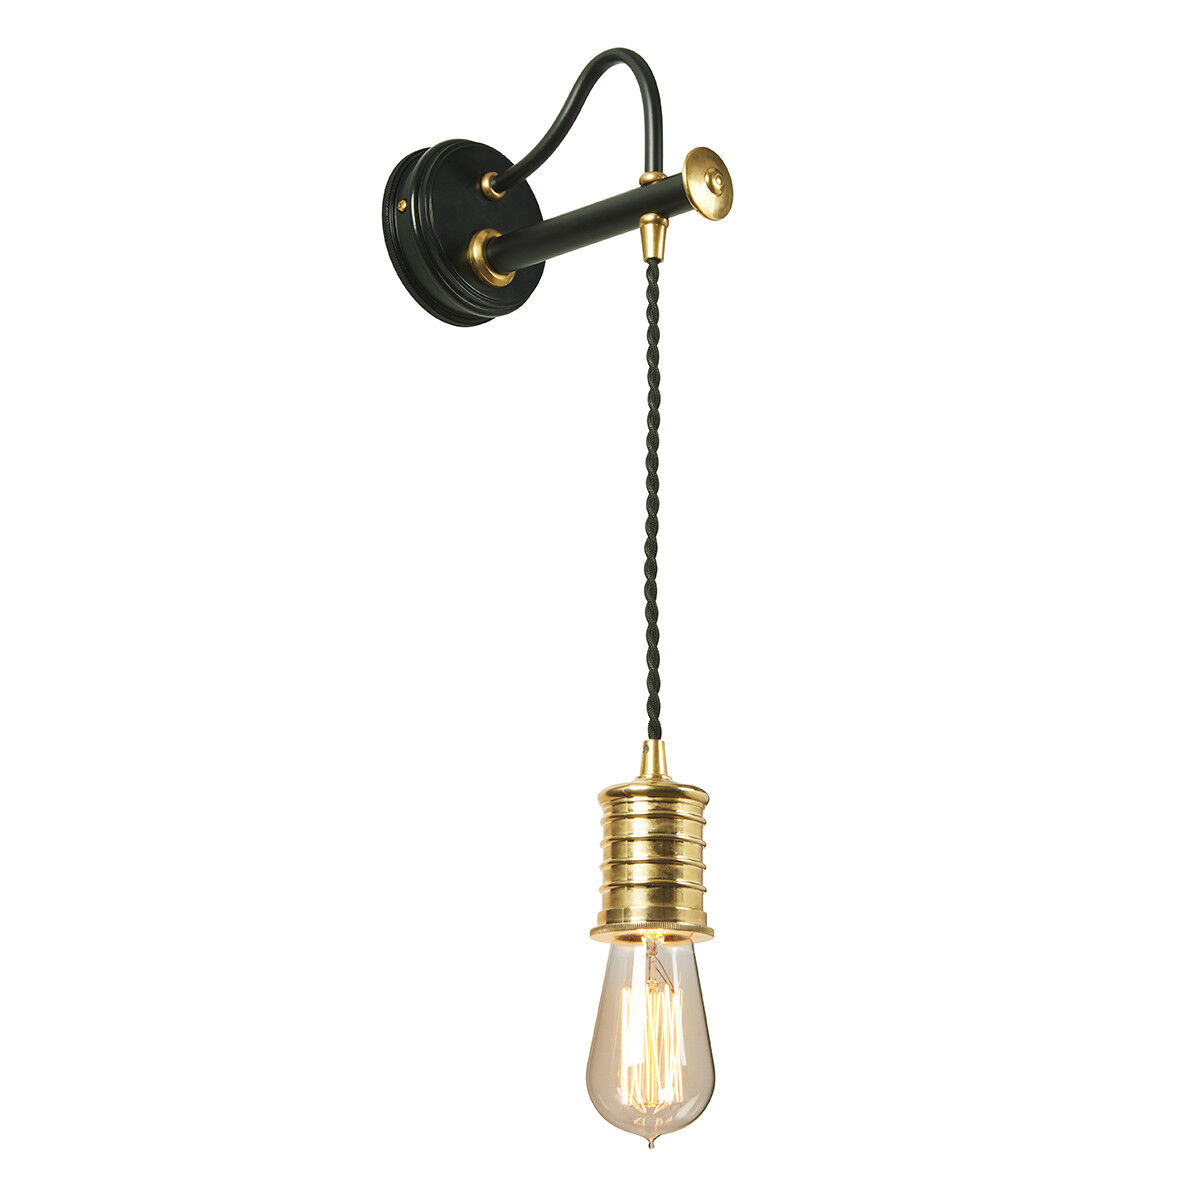 Elstead Lighting Douille 1 Light Indoor Wall Light Black, Polished Brass, E27